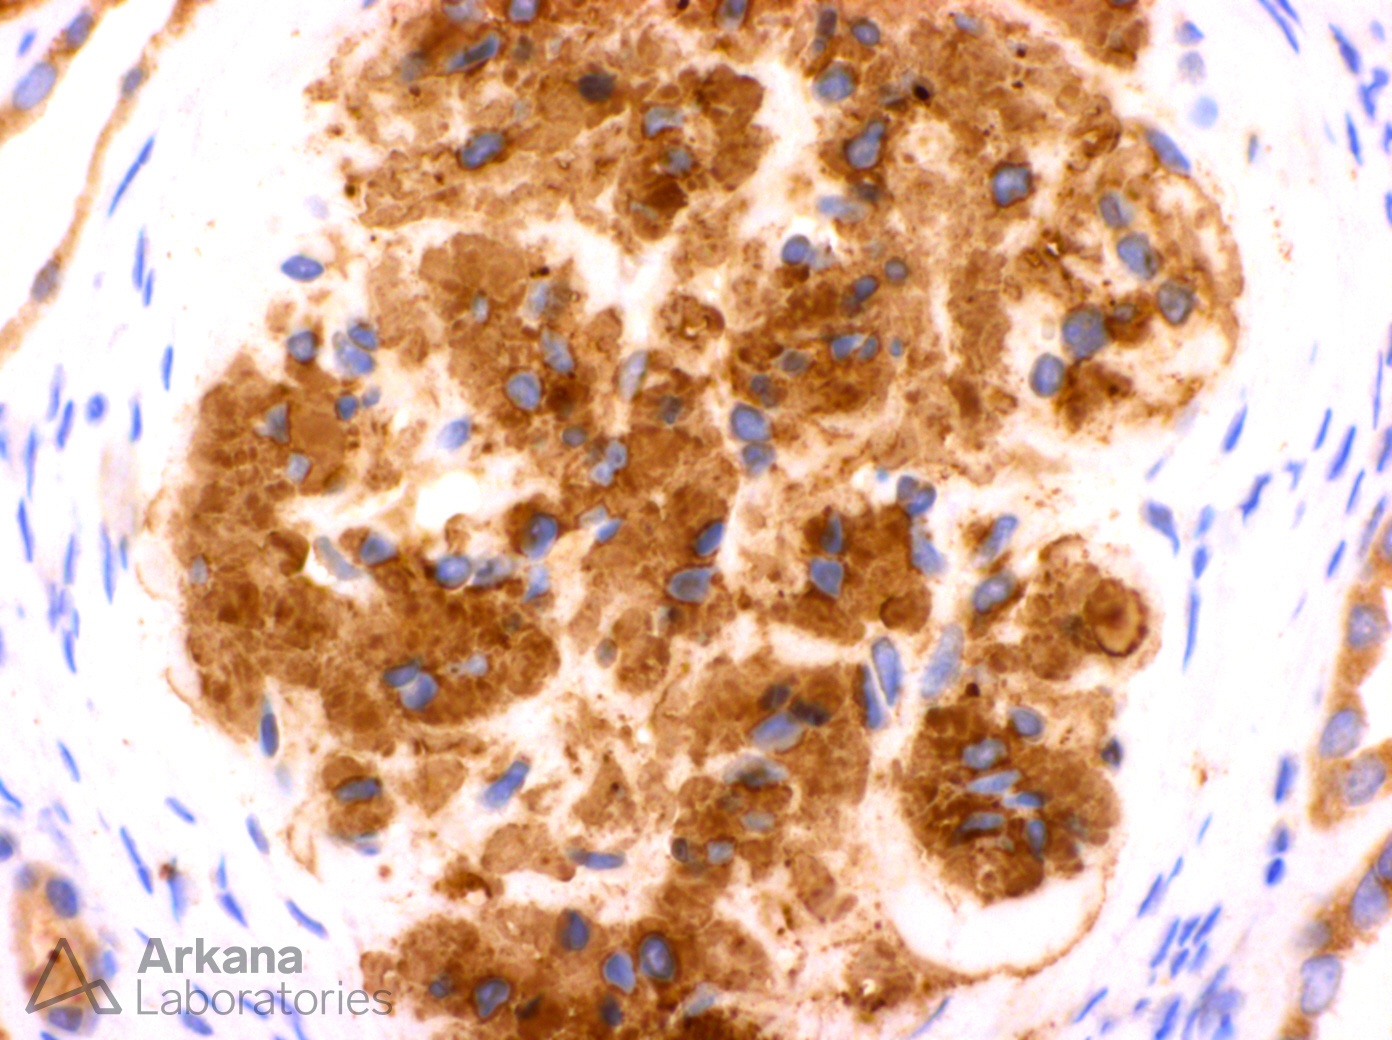 DNAJB9 staining for fibrillary glomerulopathy